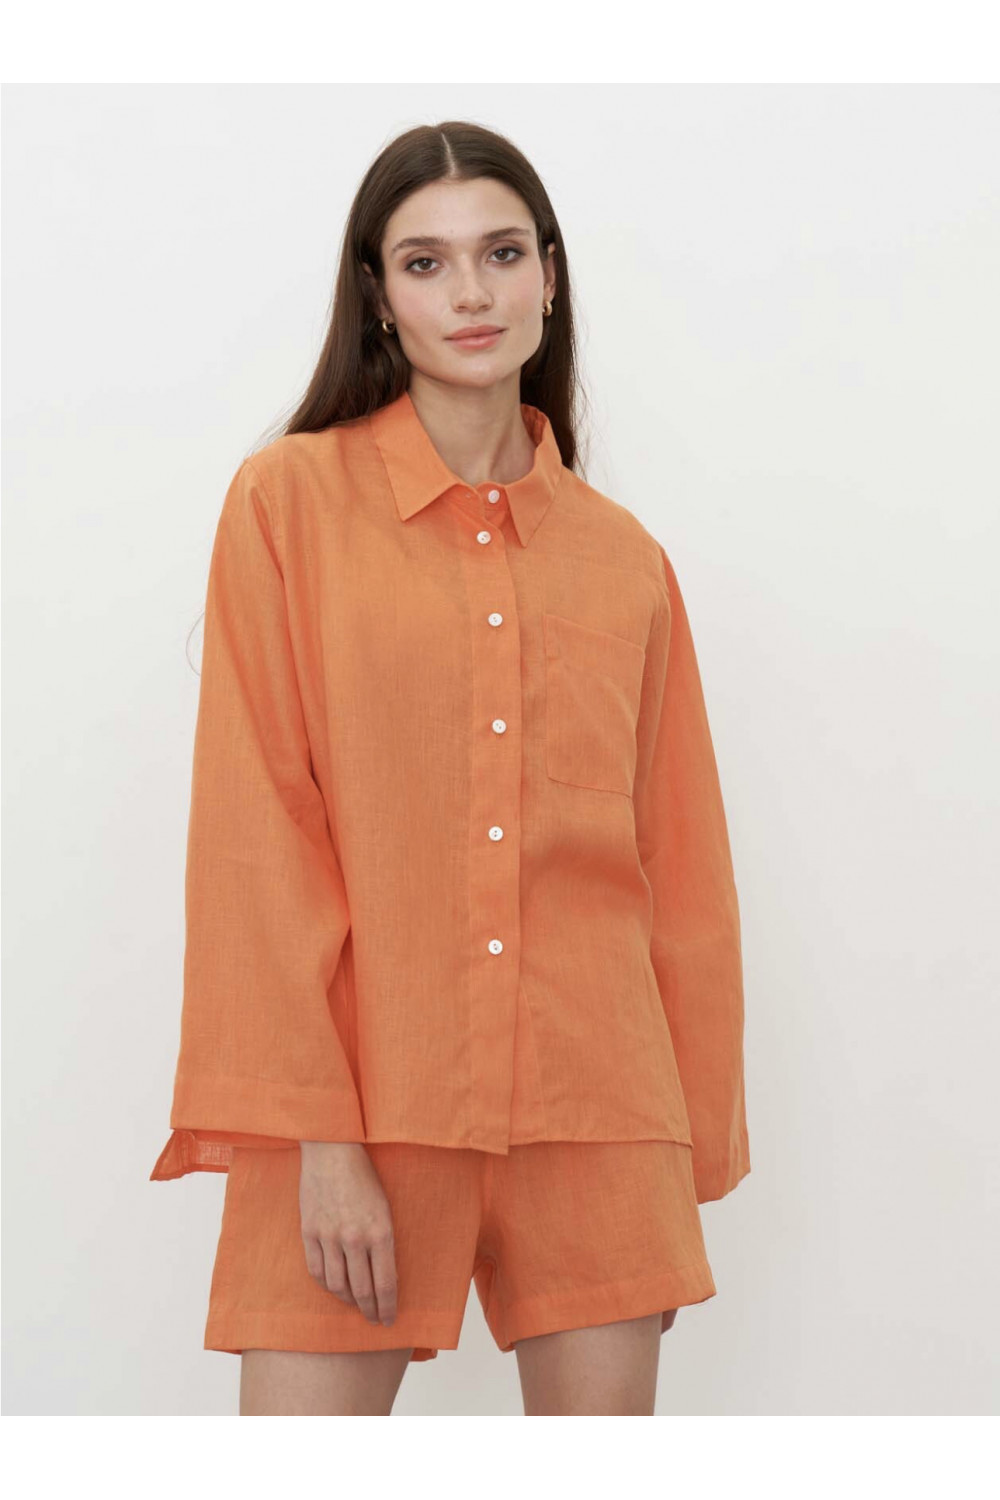 Рубашка короткая  S021_ORNG/Оранжевый